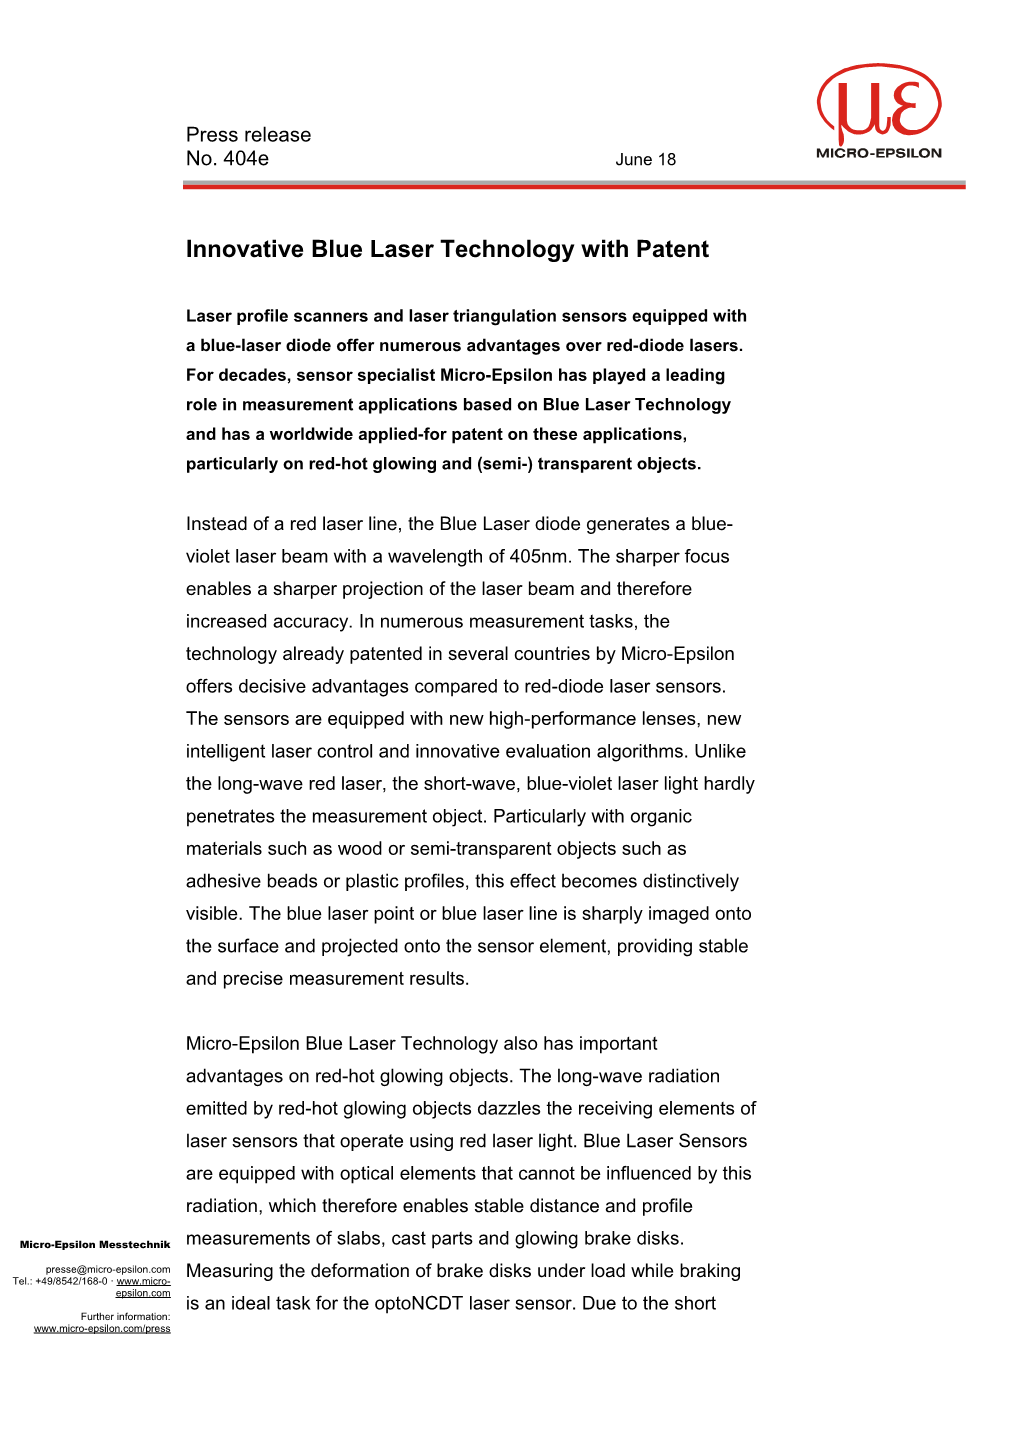 Innovative Blue Laser Technology with Patent